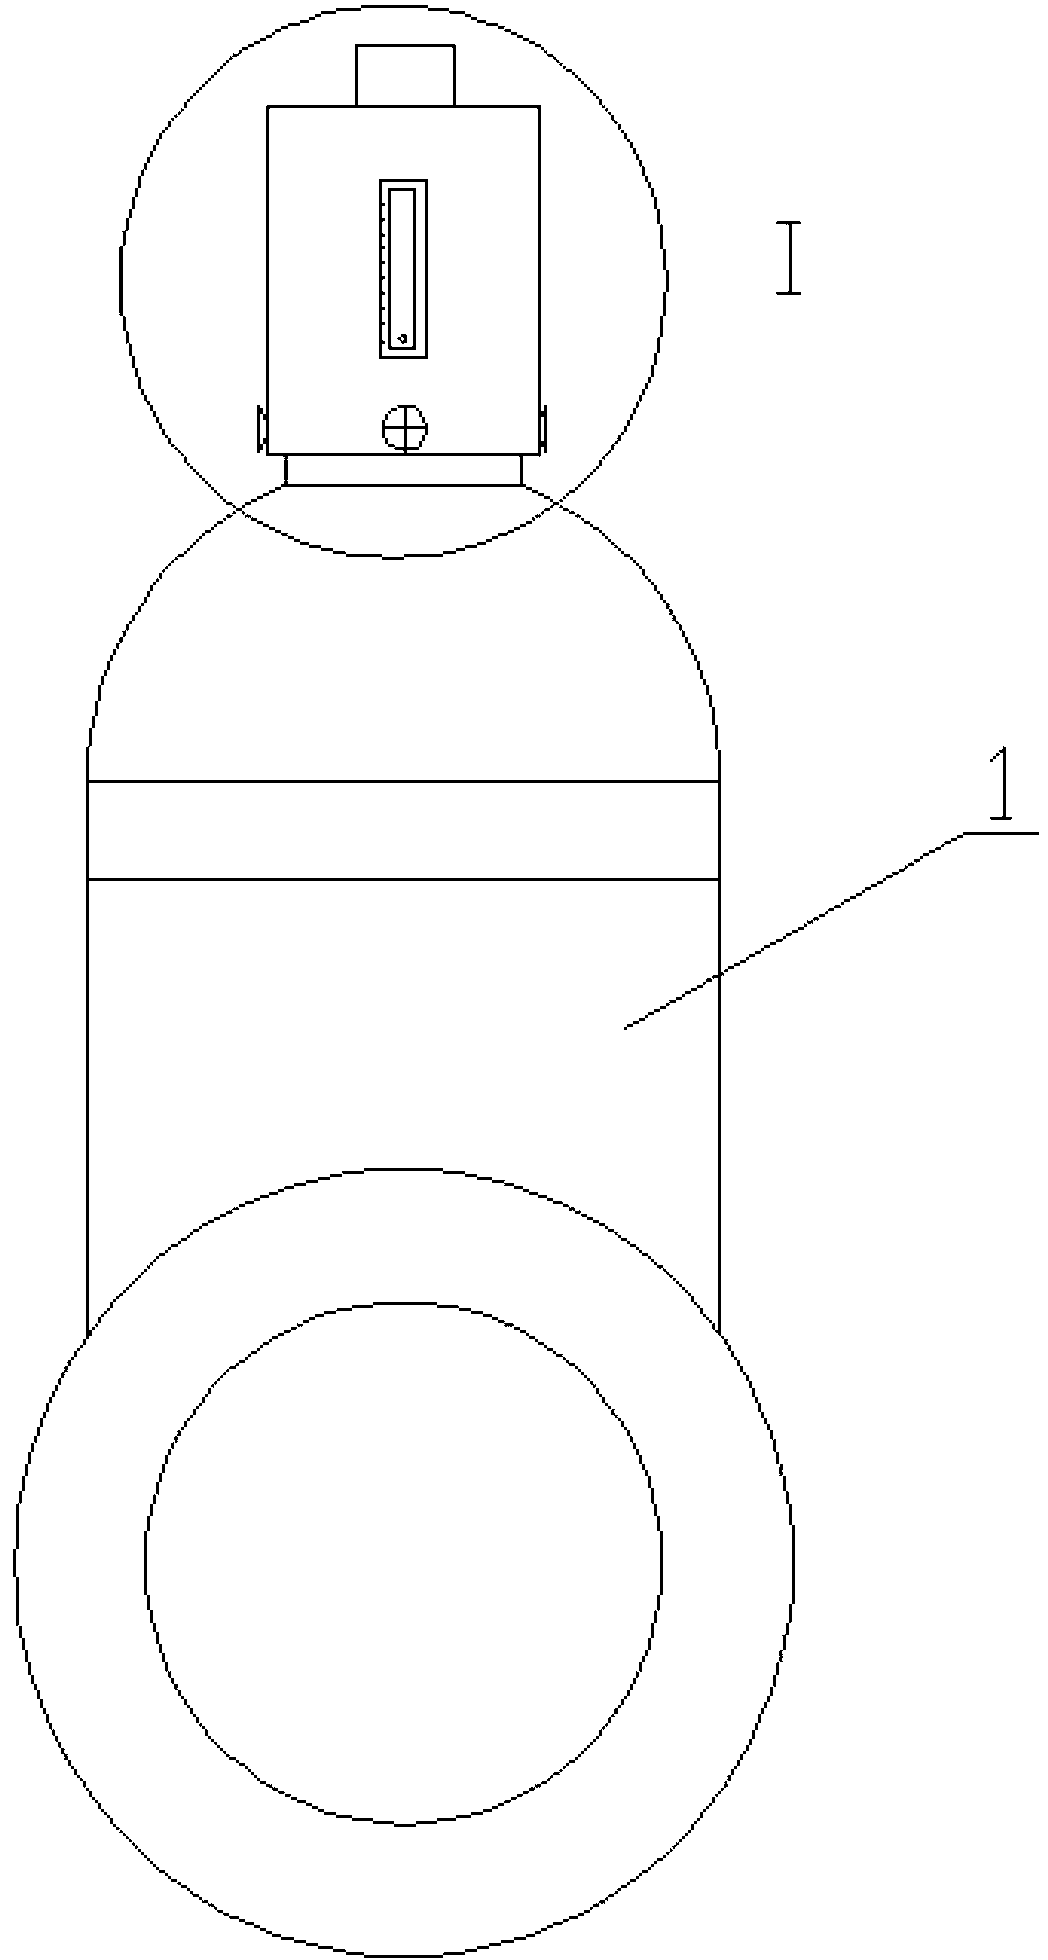 Stroke indication device of non-rising stem gate valve